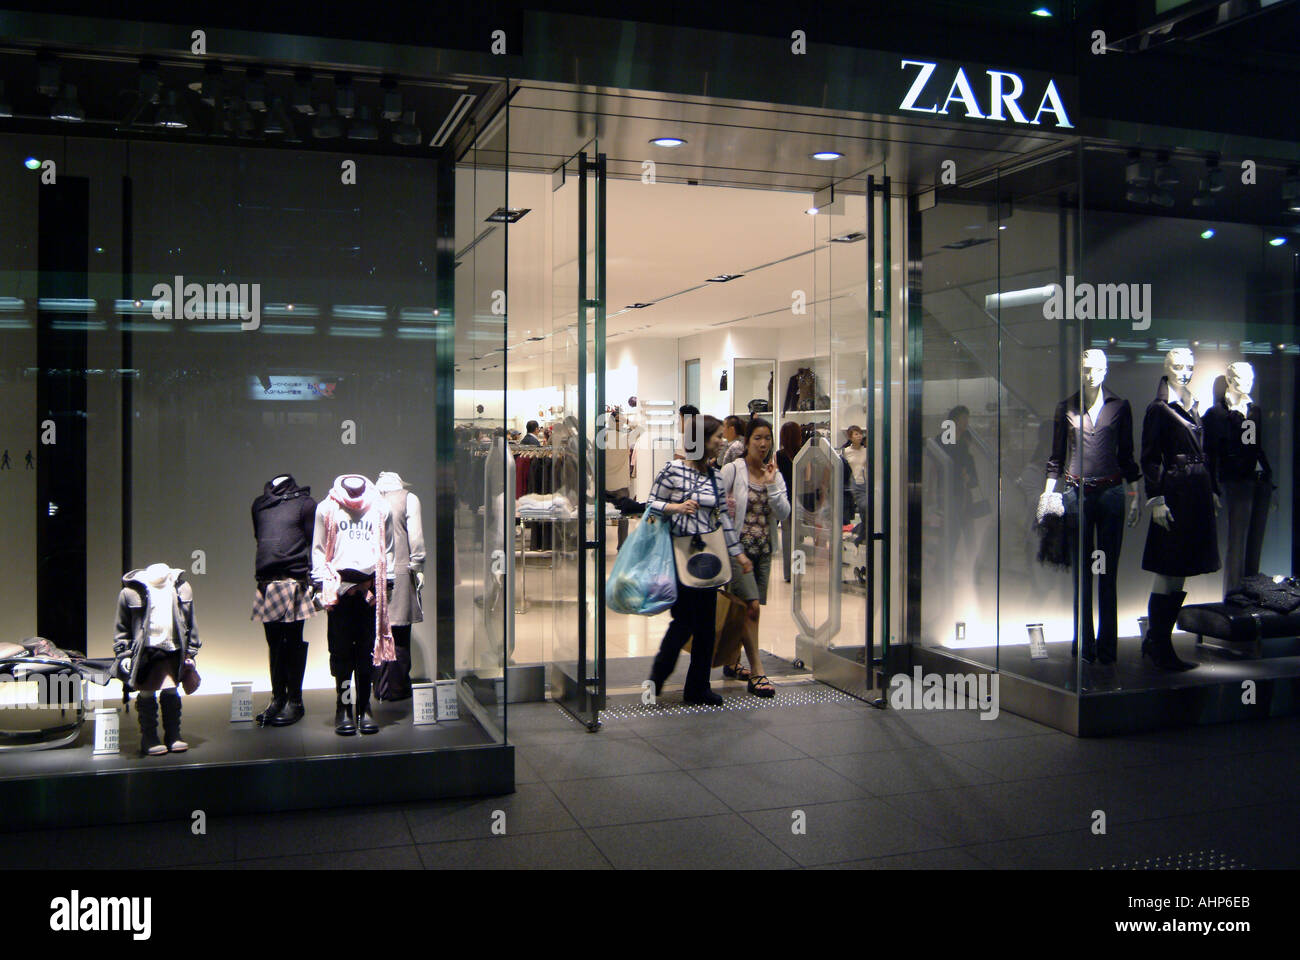 Zara shop in Shijodori Kyoto Japan Stock Photo - Alamy